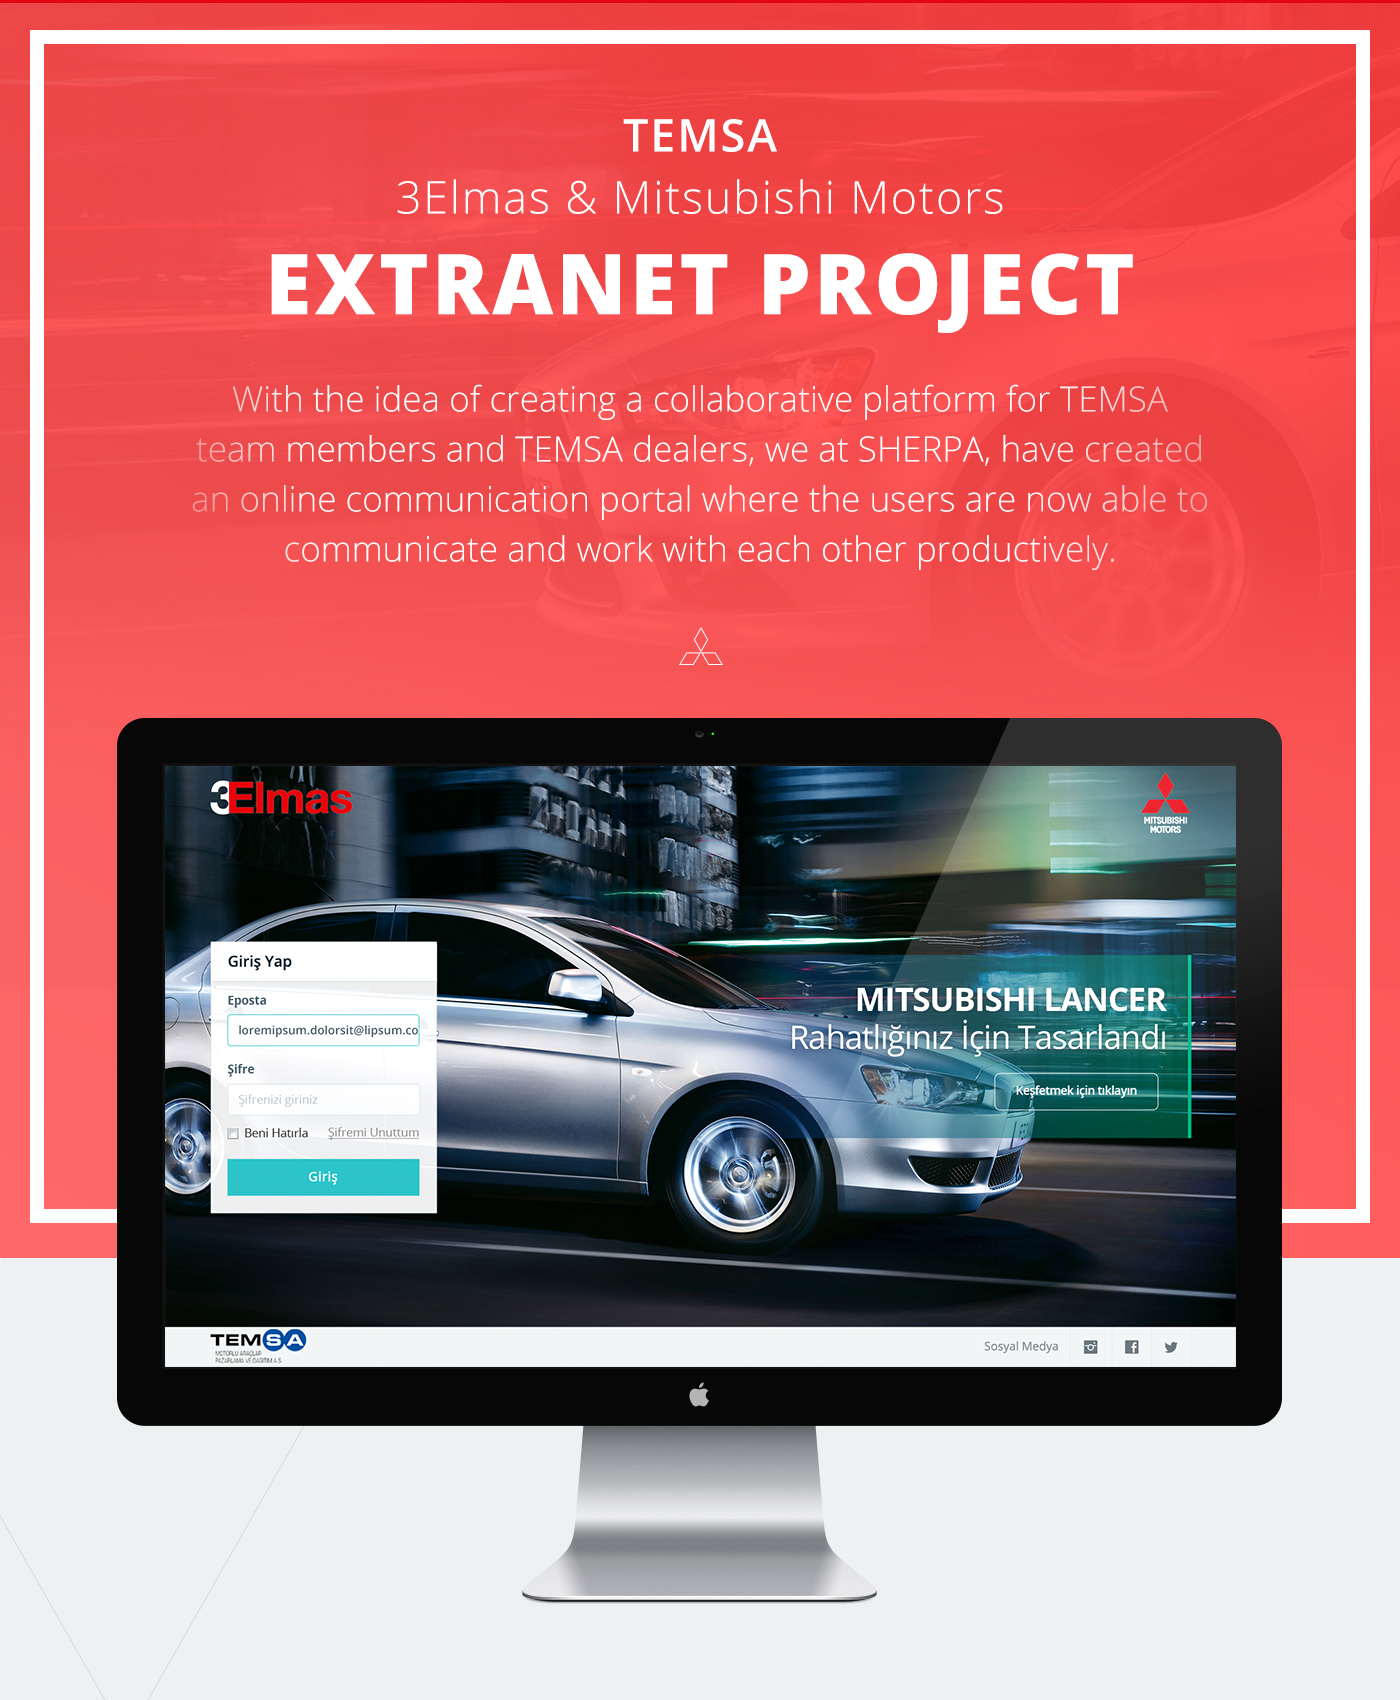 ia information user Experience Interface design user experience user interface Project product management portal extranet temsa content